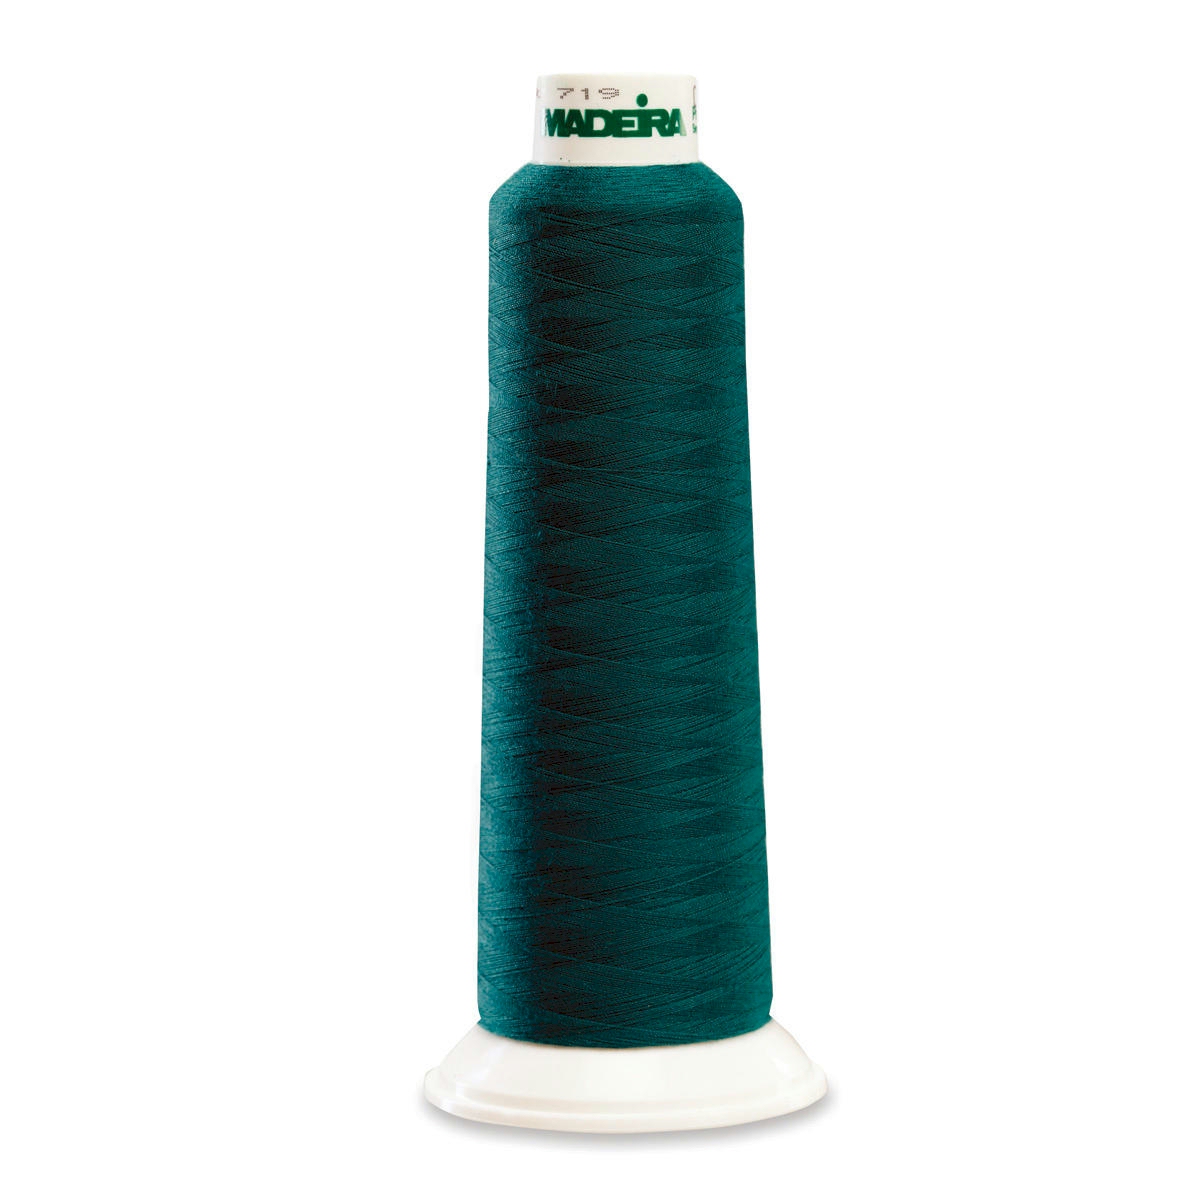 Madeira Aerolock Premium Serger Thread 2000 Yard Cone - TEAL